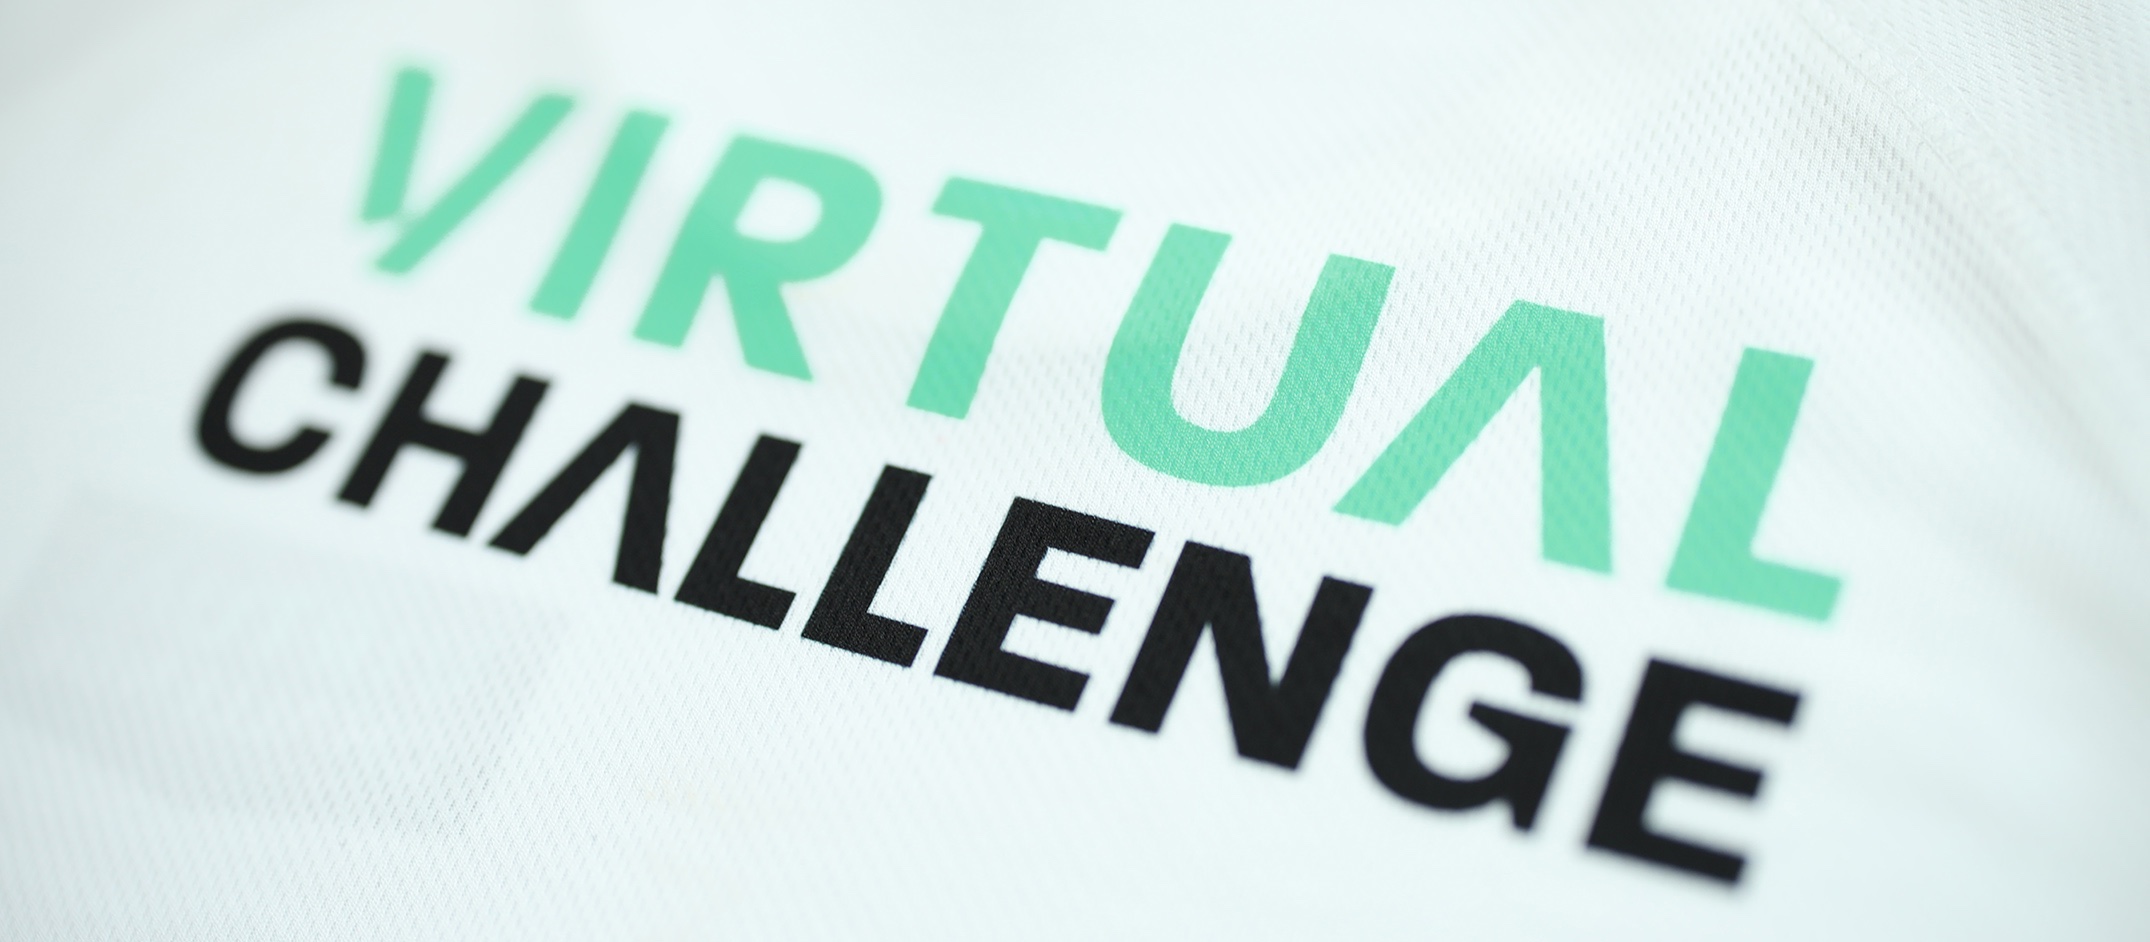 Virtual Challenge logo on t-shirt